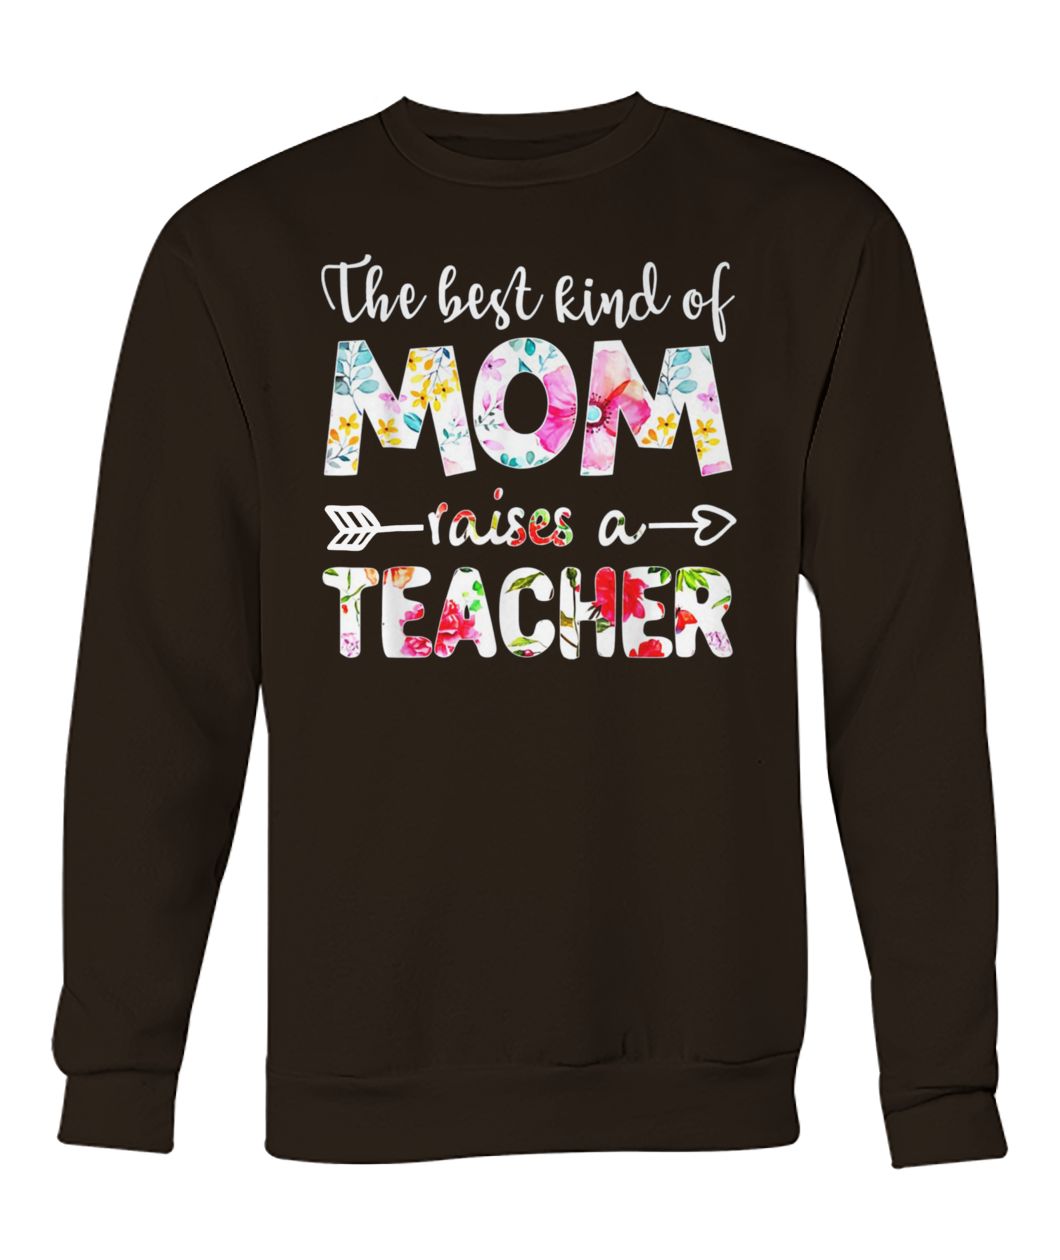 The best kind of mom raises a teacher mix flower crew neck sweatshirt